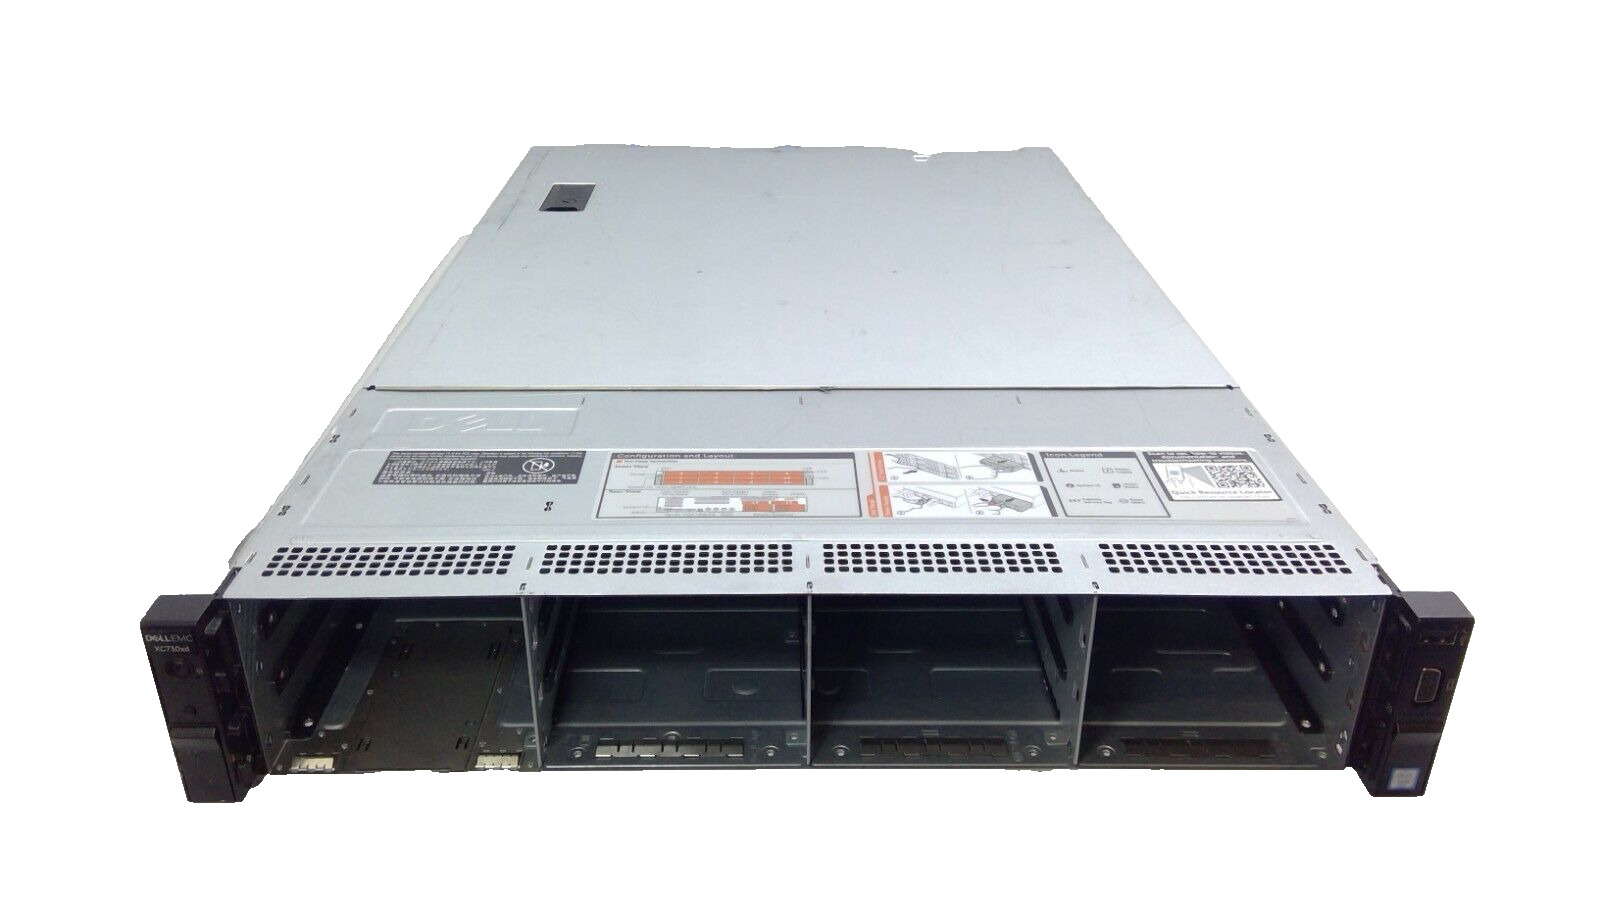 DELL EMC XC730xd 12 BAY 3.5